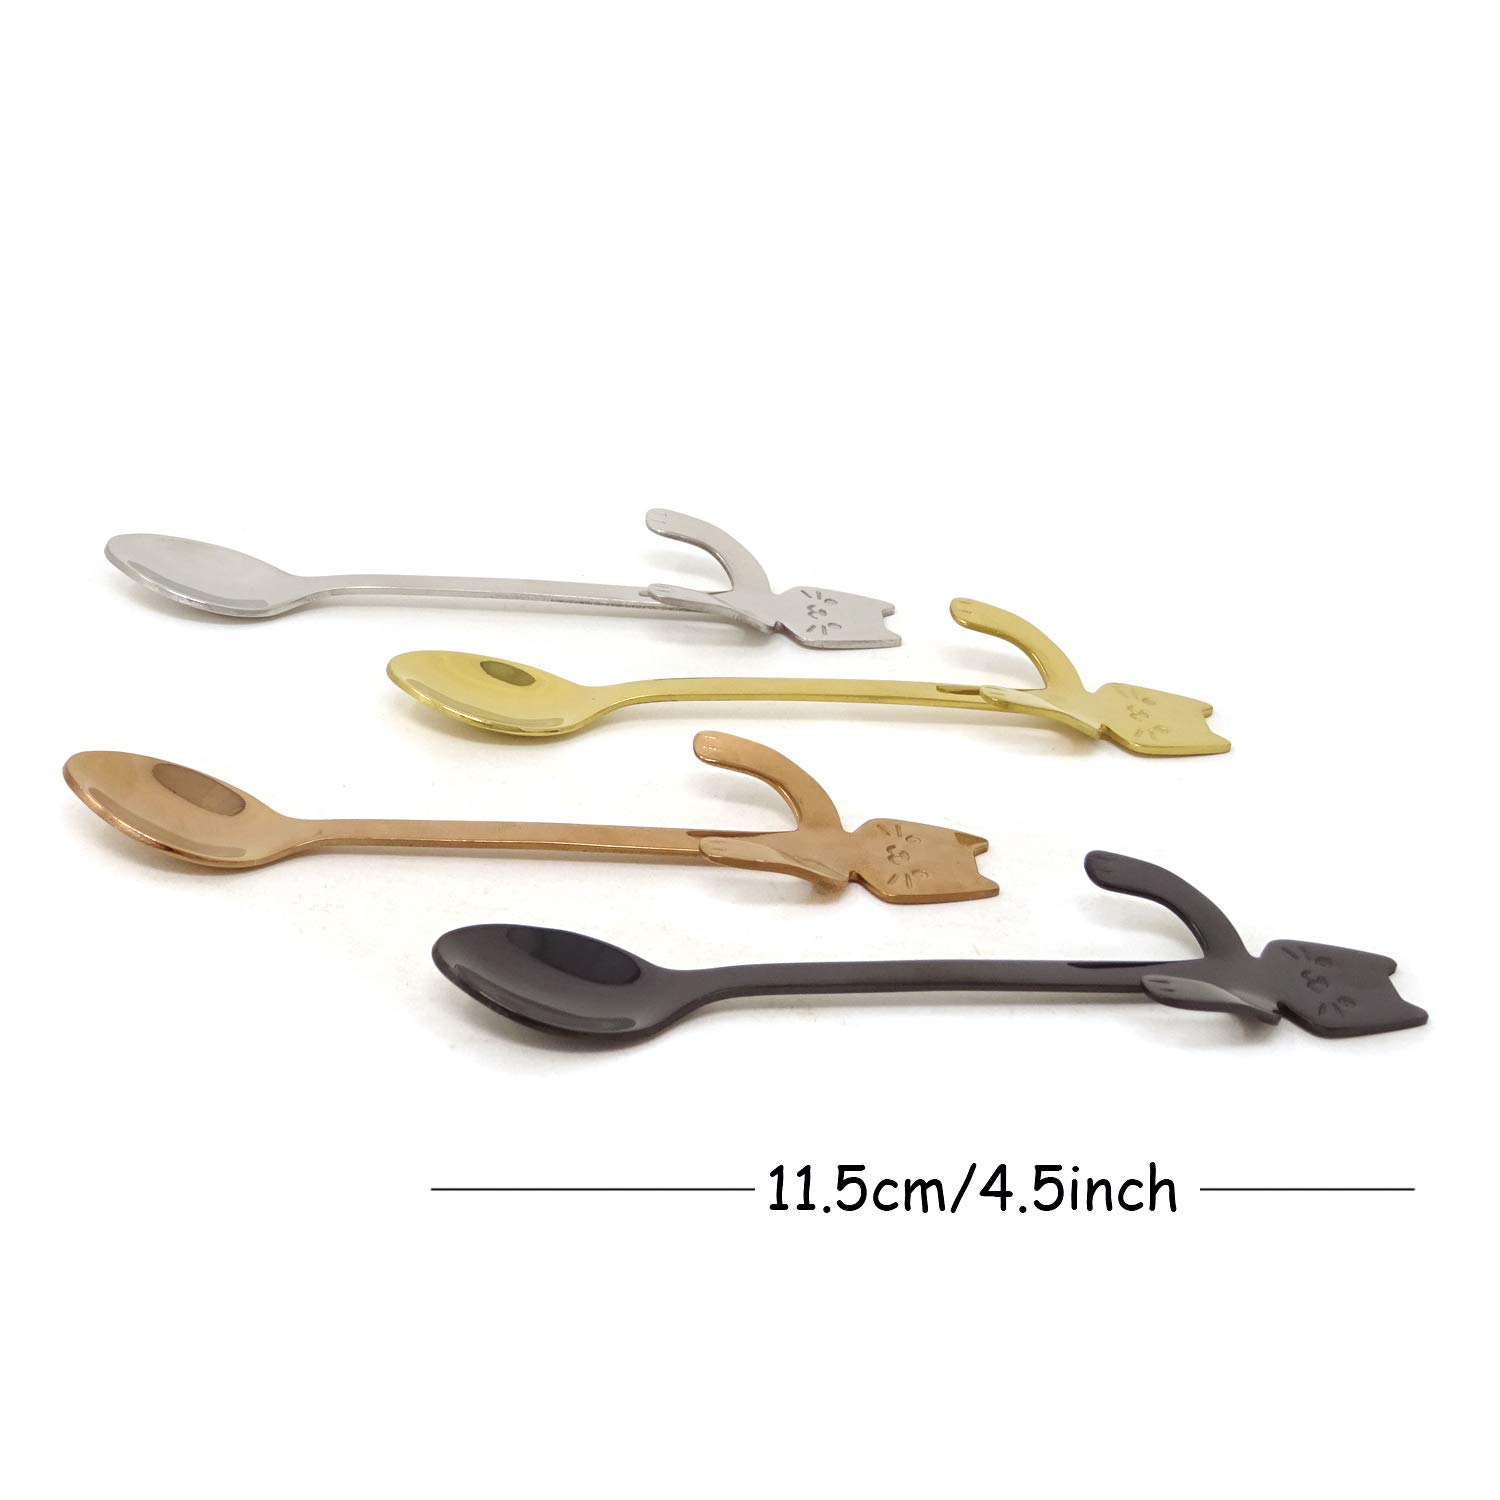 Honbay 4PCS Stainless Steel Cute Mini Cat Spoon for Tea, Coffee, Dessert, Sugar, Ice Cream, etc (11.5cm/4.5inch)